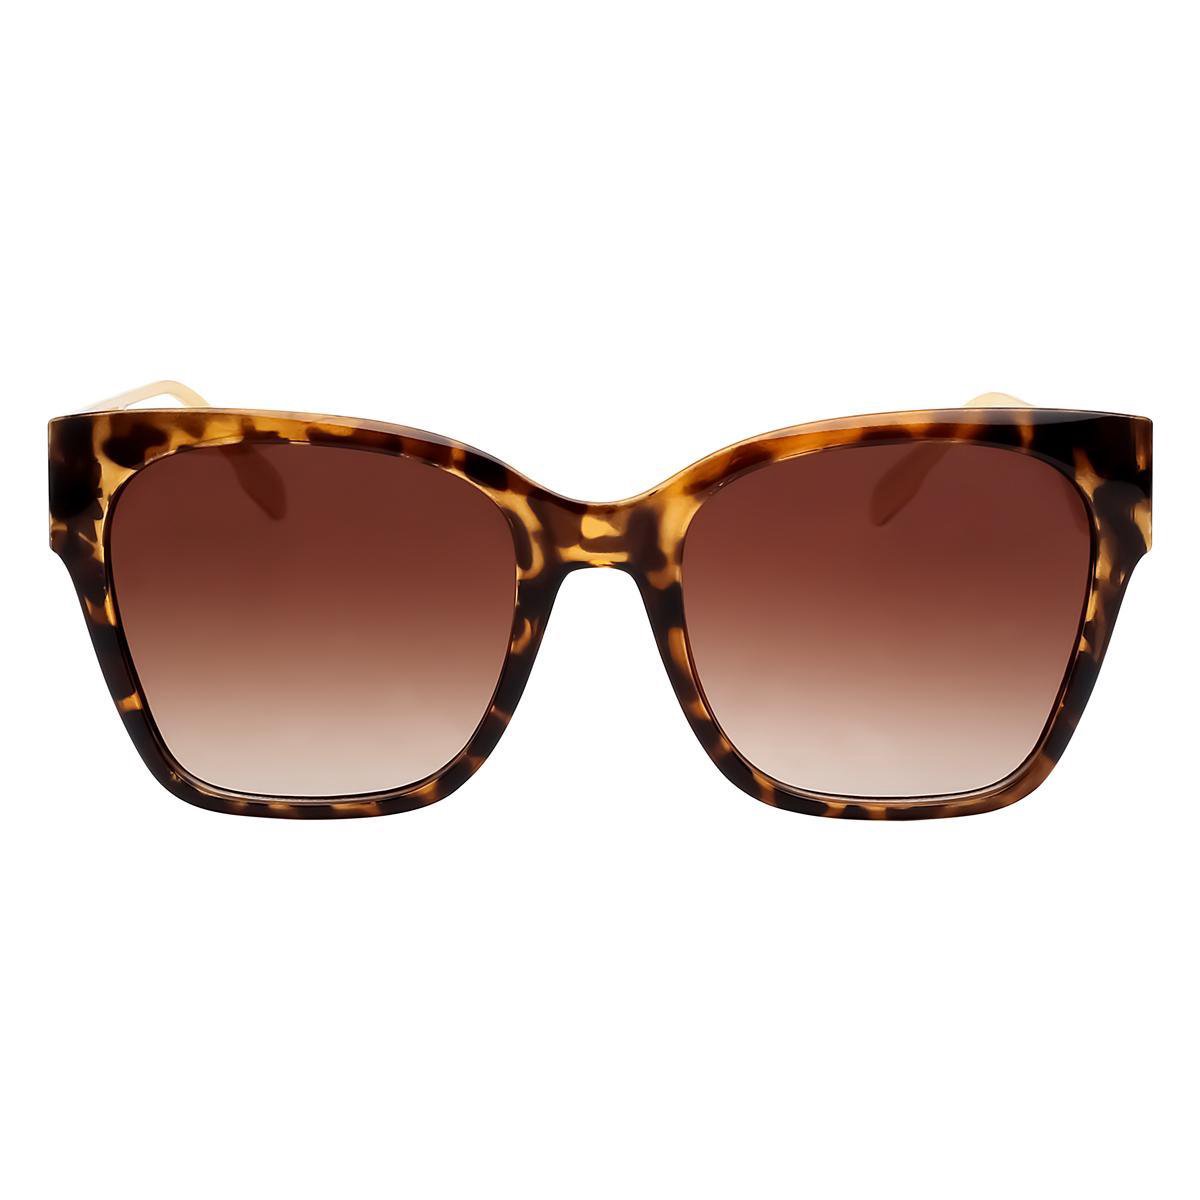 Jobo By JET - Zonnebril - sunglasses - Bruin - Goud - Gouden pootjes - Fashion - Trend - 2021